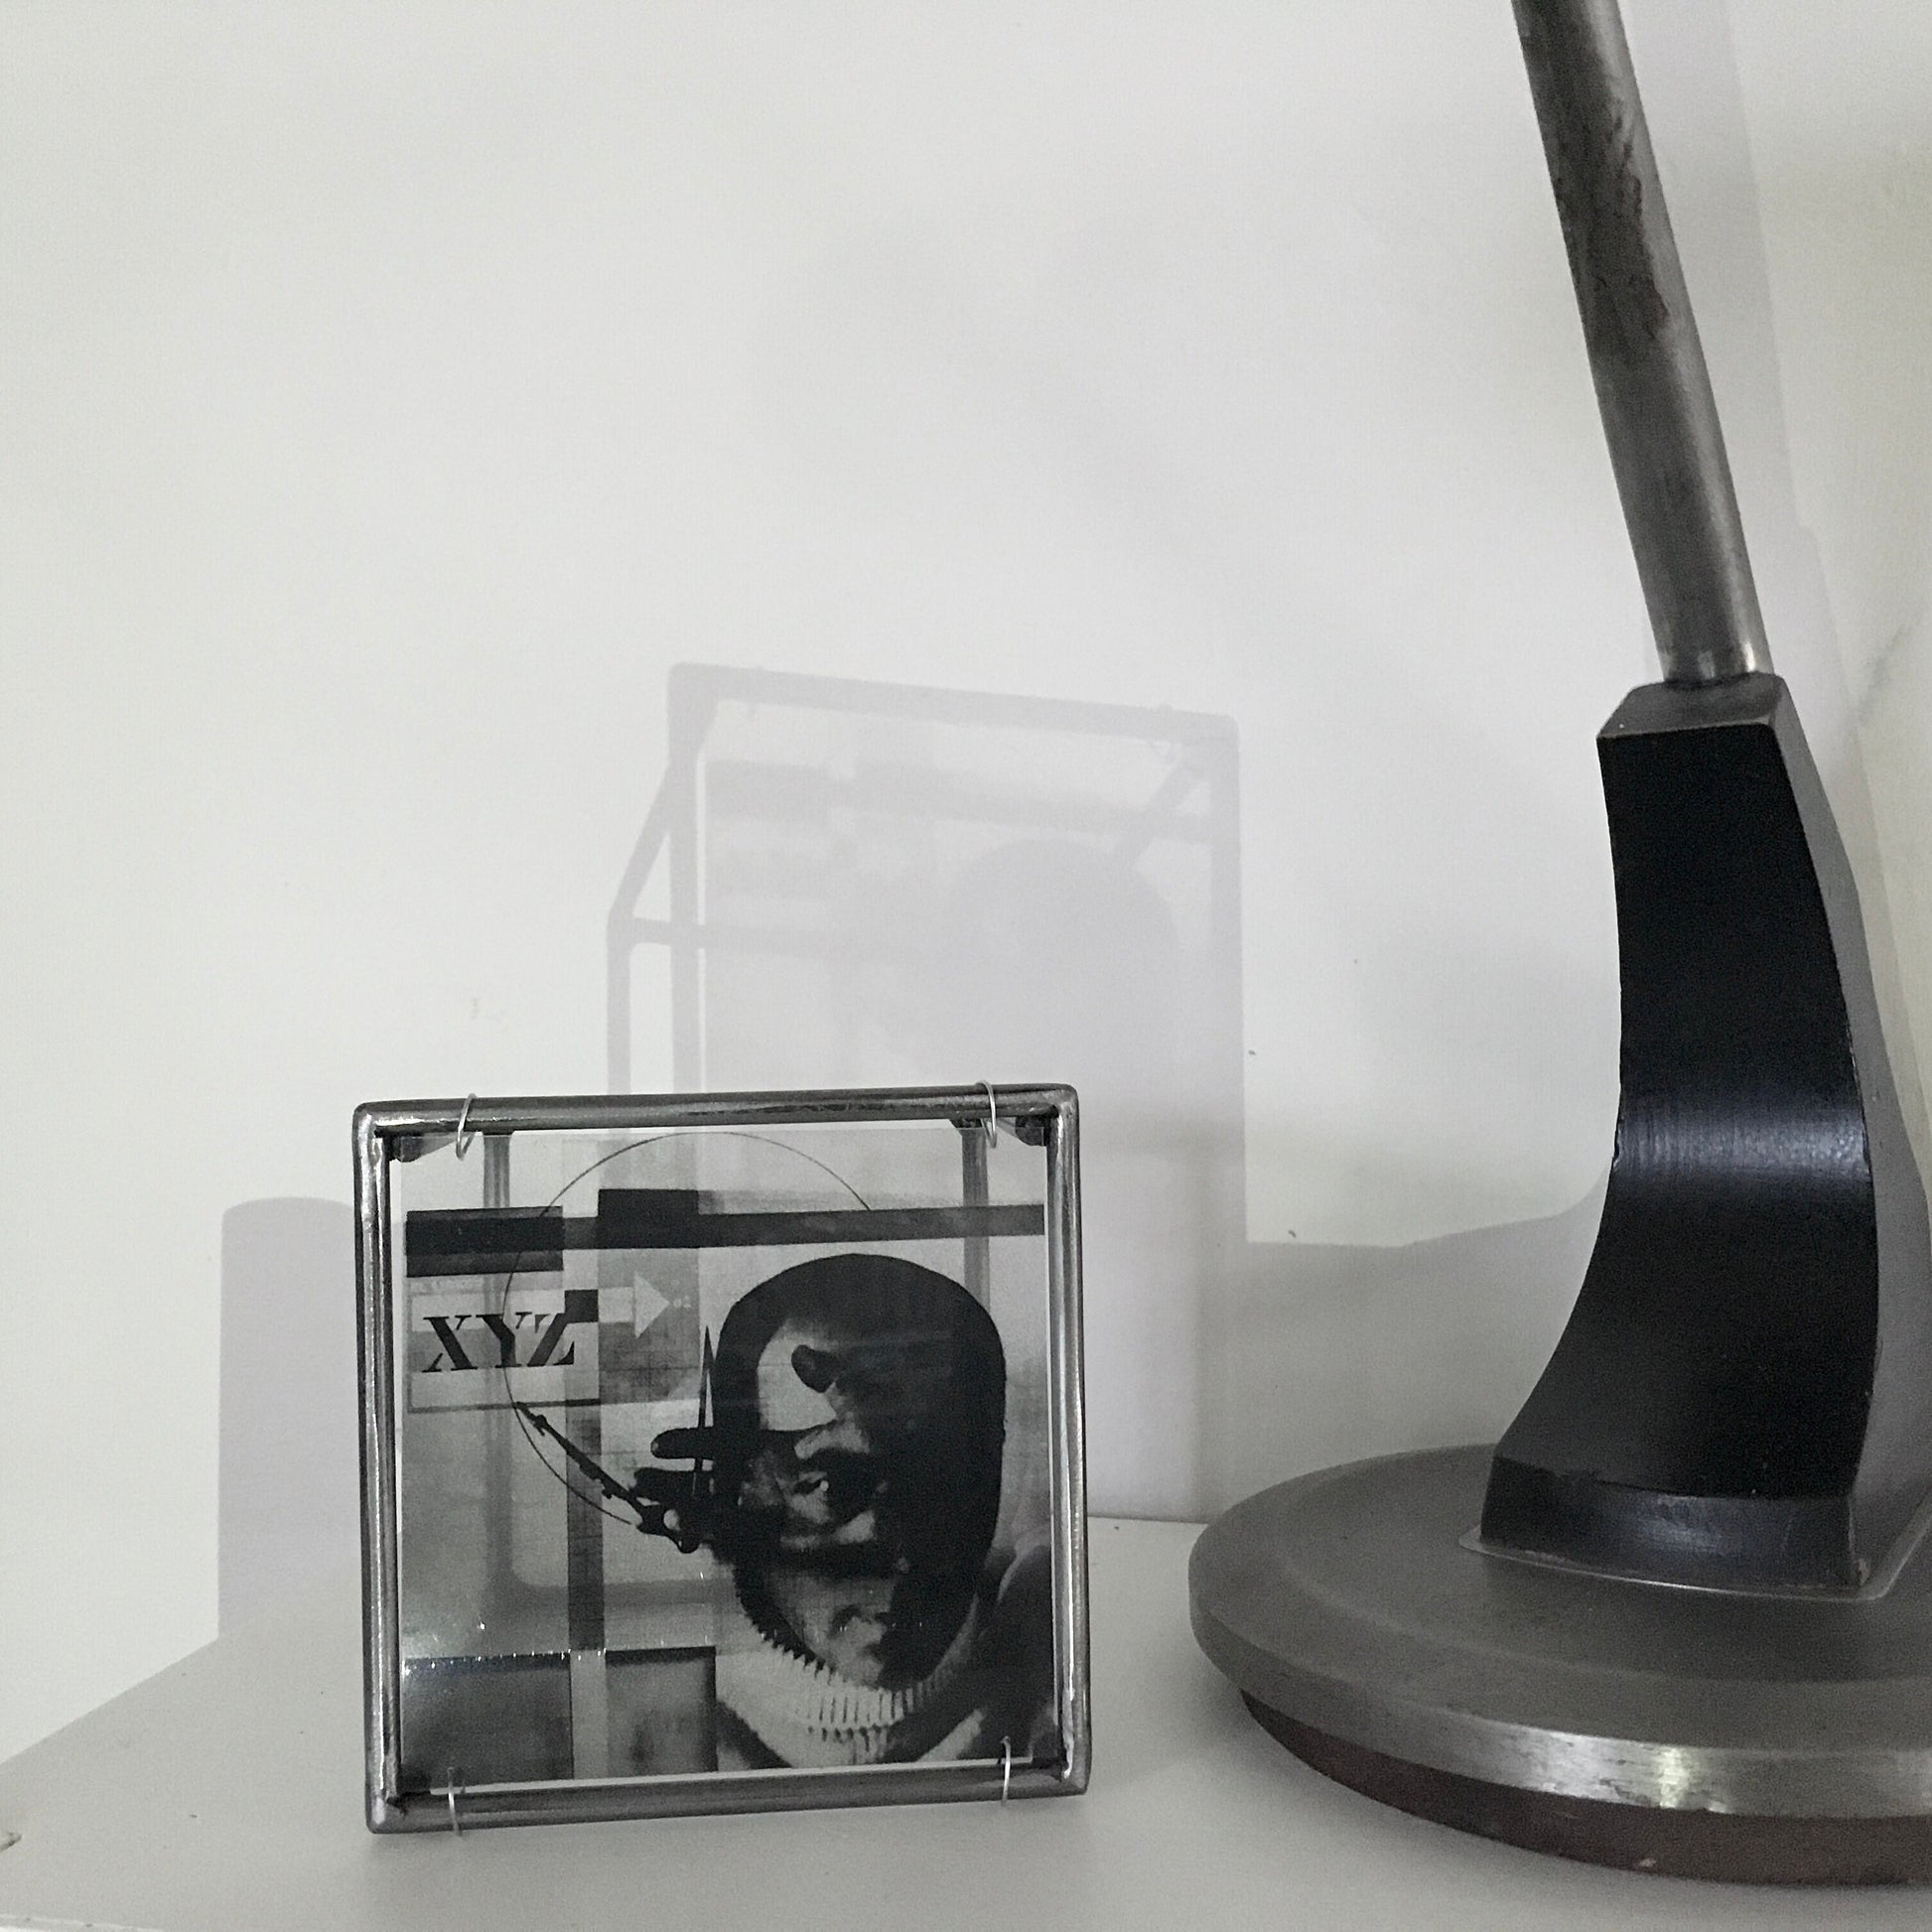 El Lissitzky, self portrait photo collage - Metal art sculpture hand of god symbol next to desk lamp desk top art piece